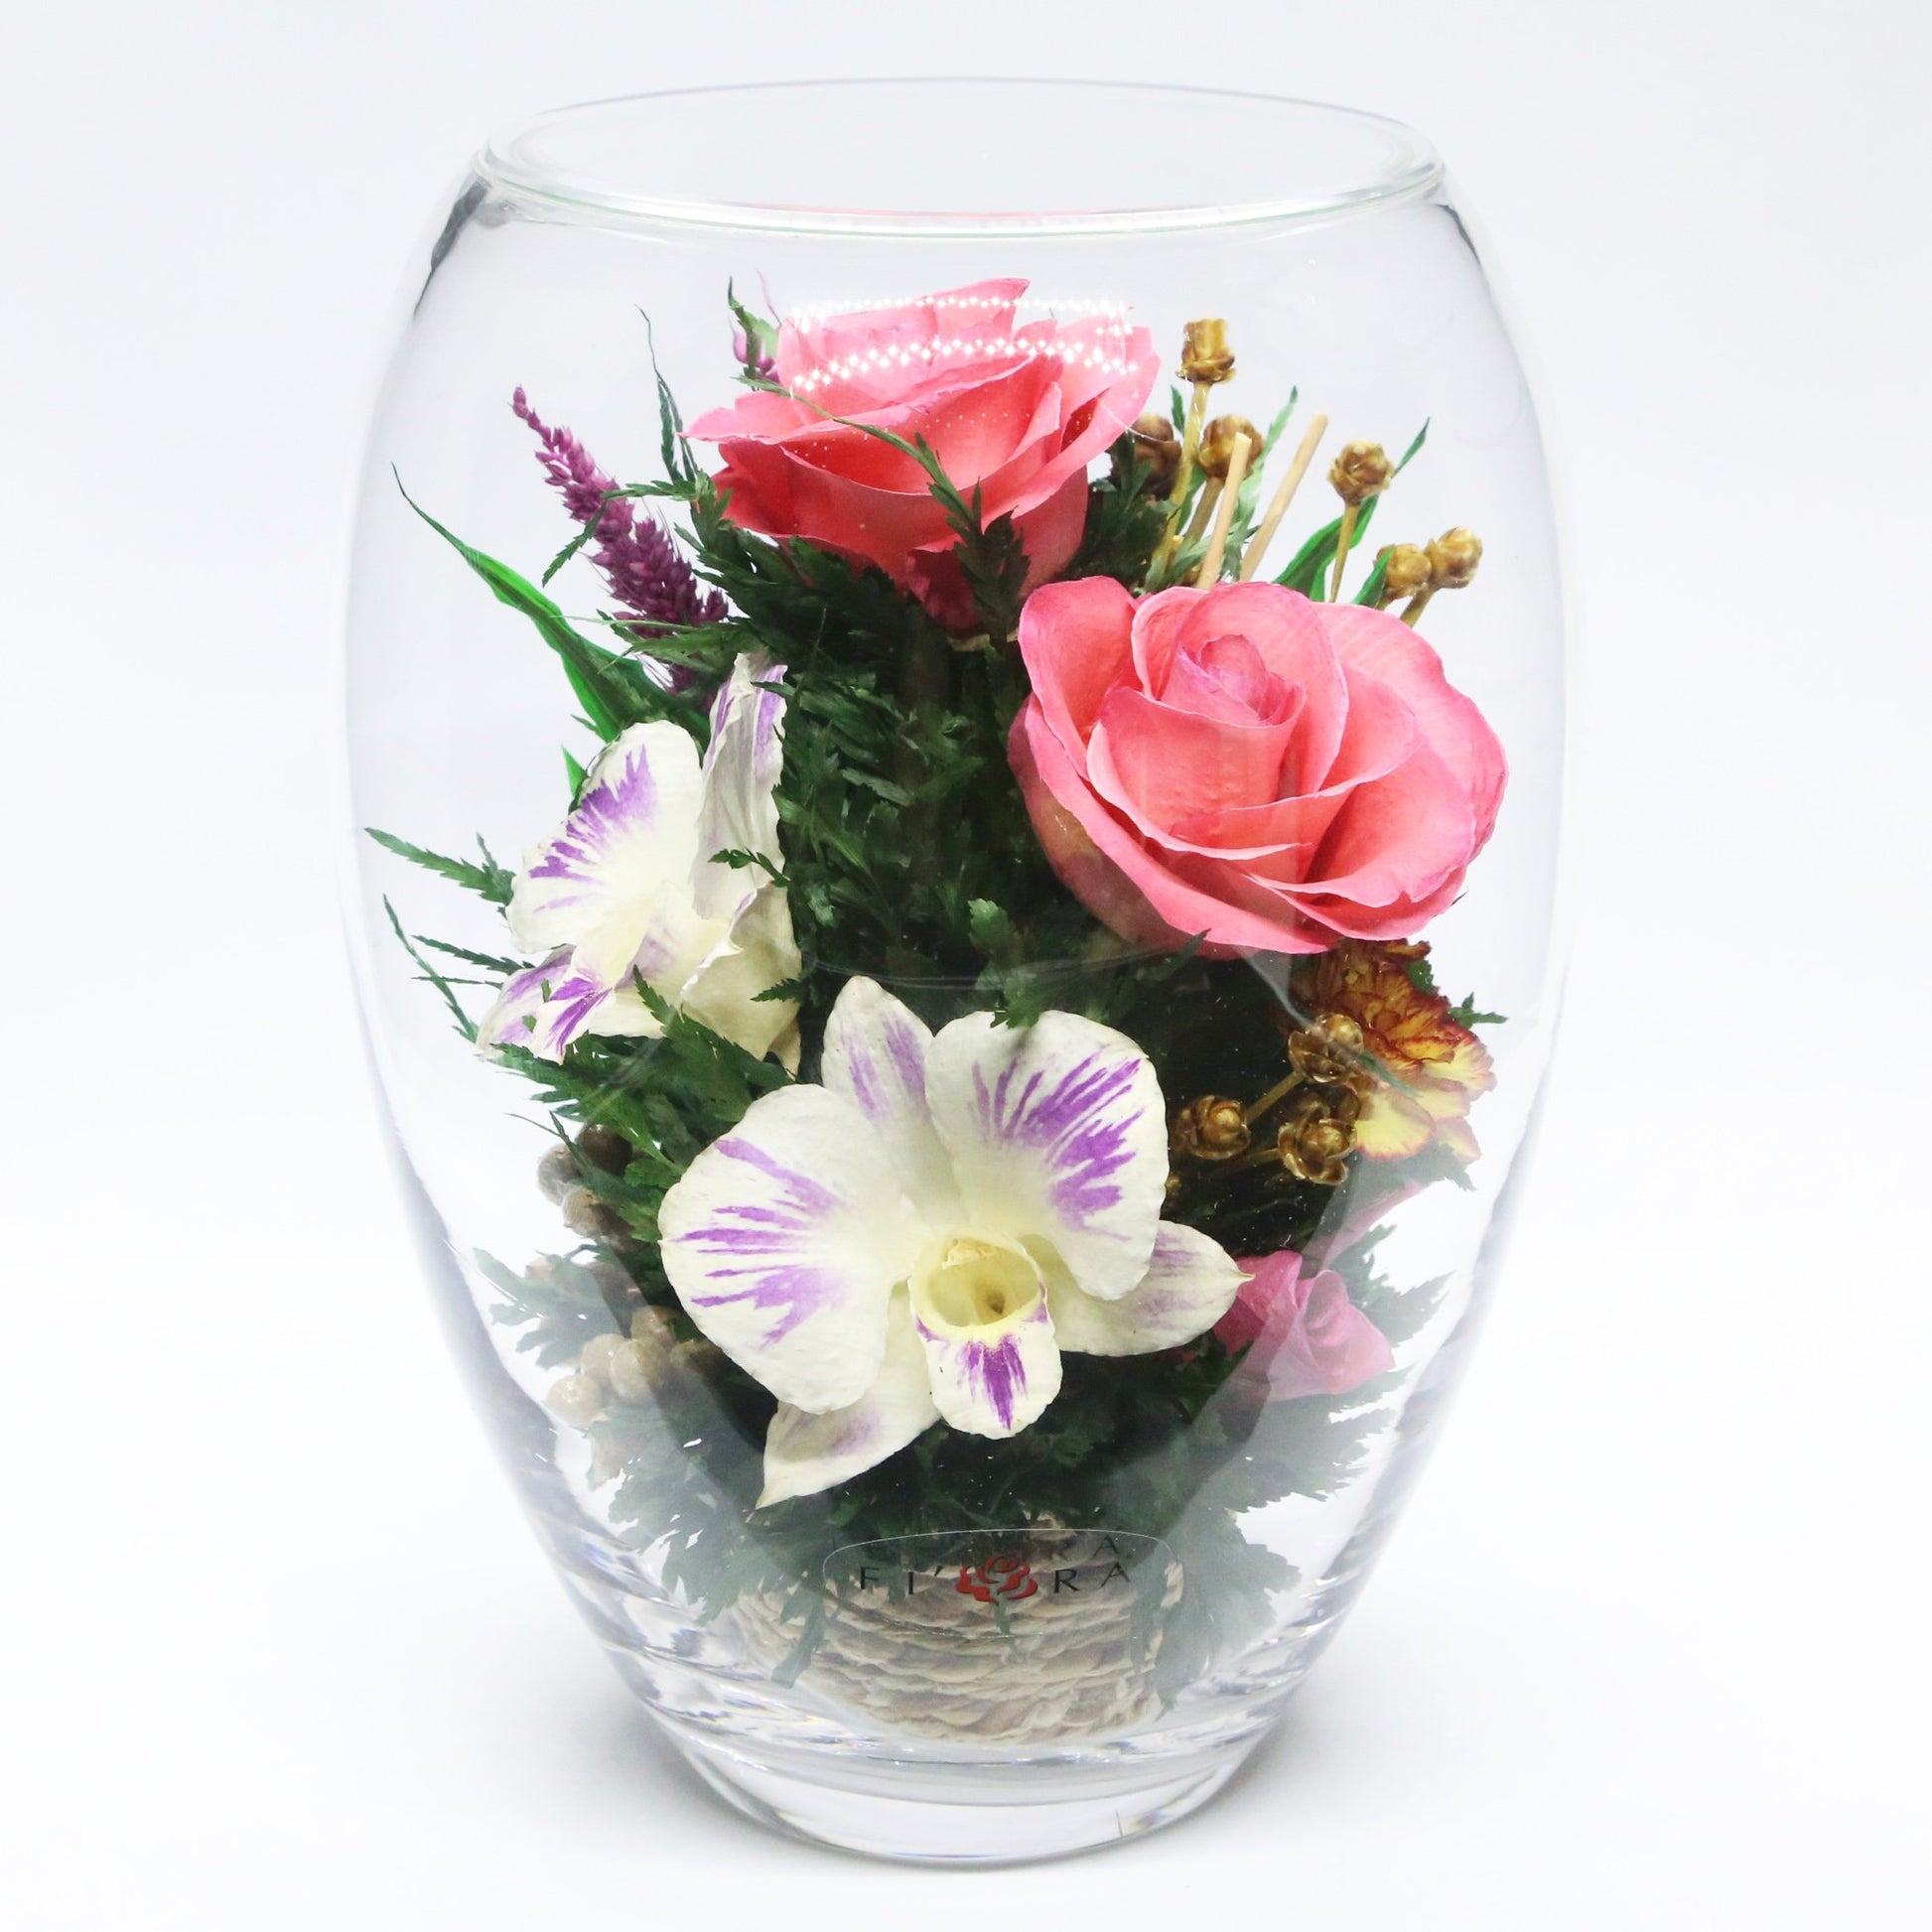 61097 Long-Lasting Pink Roses, Purple-Striped White & King Dragon Orchids, Orange Spray Carnations in an Elliptical Glass Vase - FIORA FLOWER